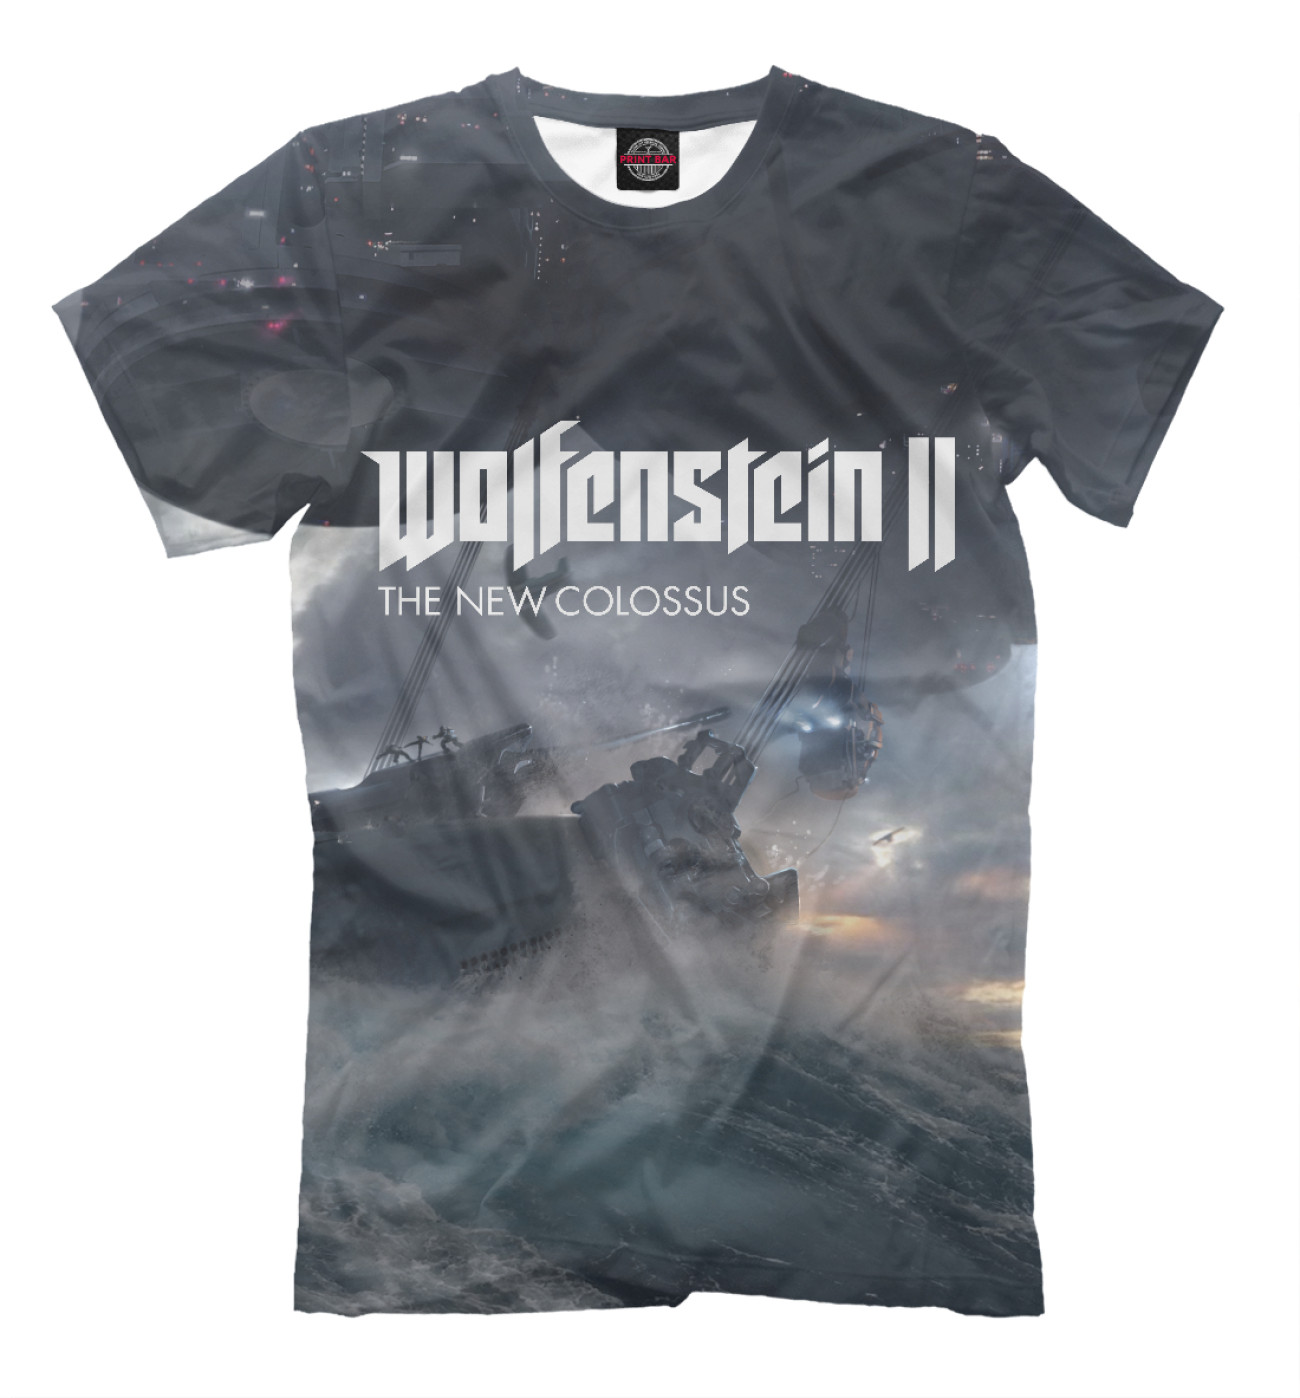 Мужская Футболка Wolfenstein 2 The New Colossus, артикул: RPG-361498-fut-2